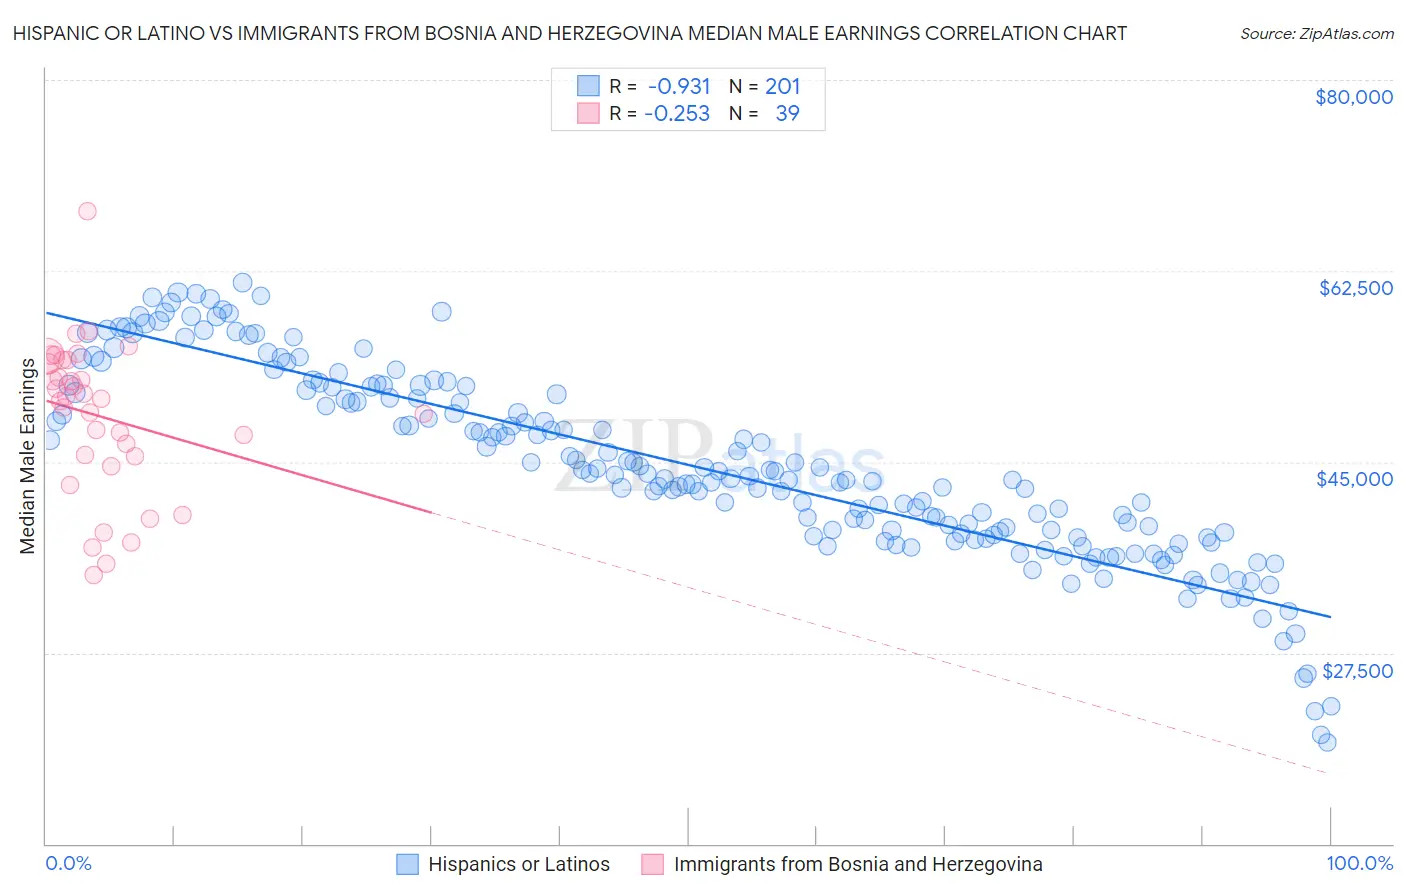 Hispanic or Latino vs Immigrants from Bosnia and Herzegovina Median Male Earnings